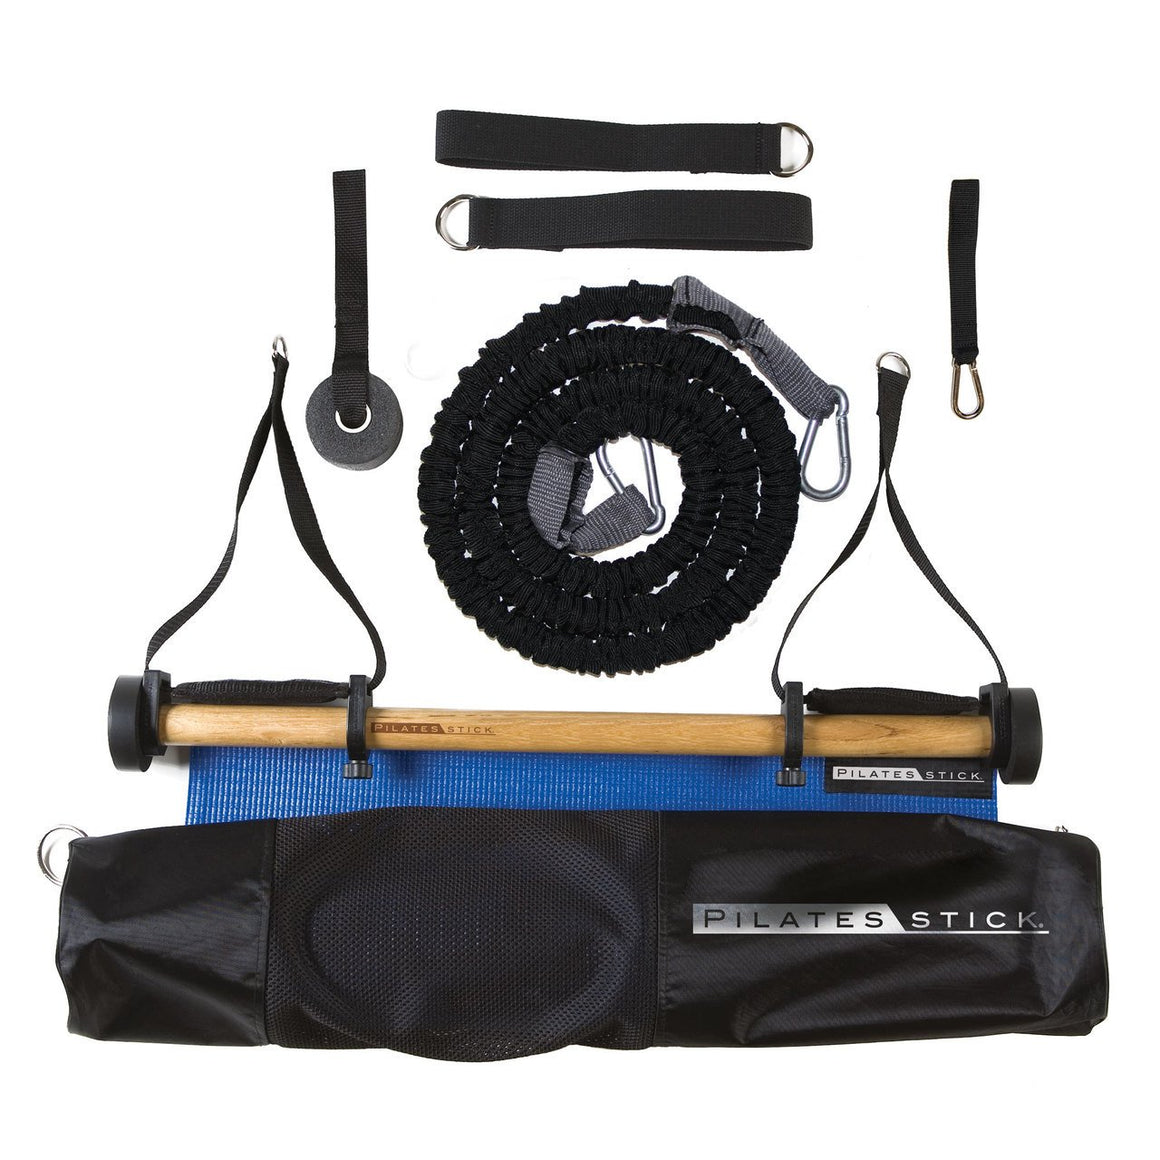 Pilatesstick Basic Kit Package - Indoor Cyclery